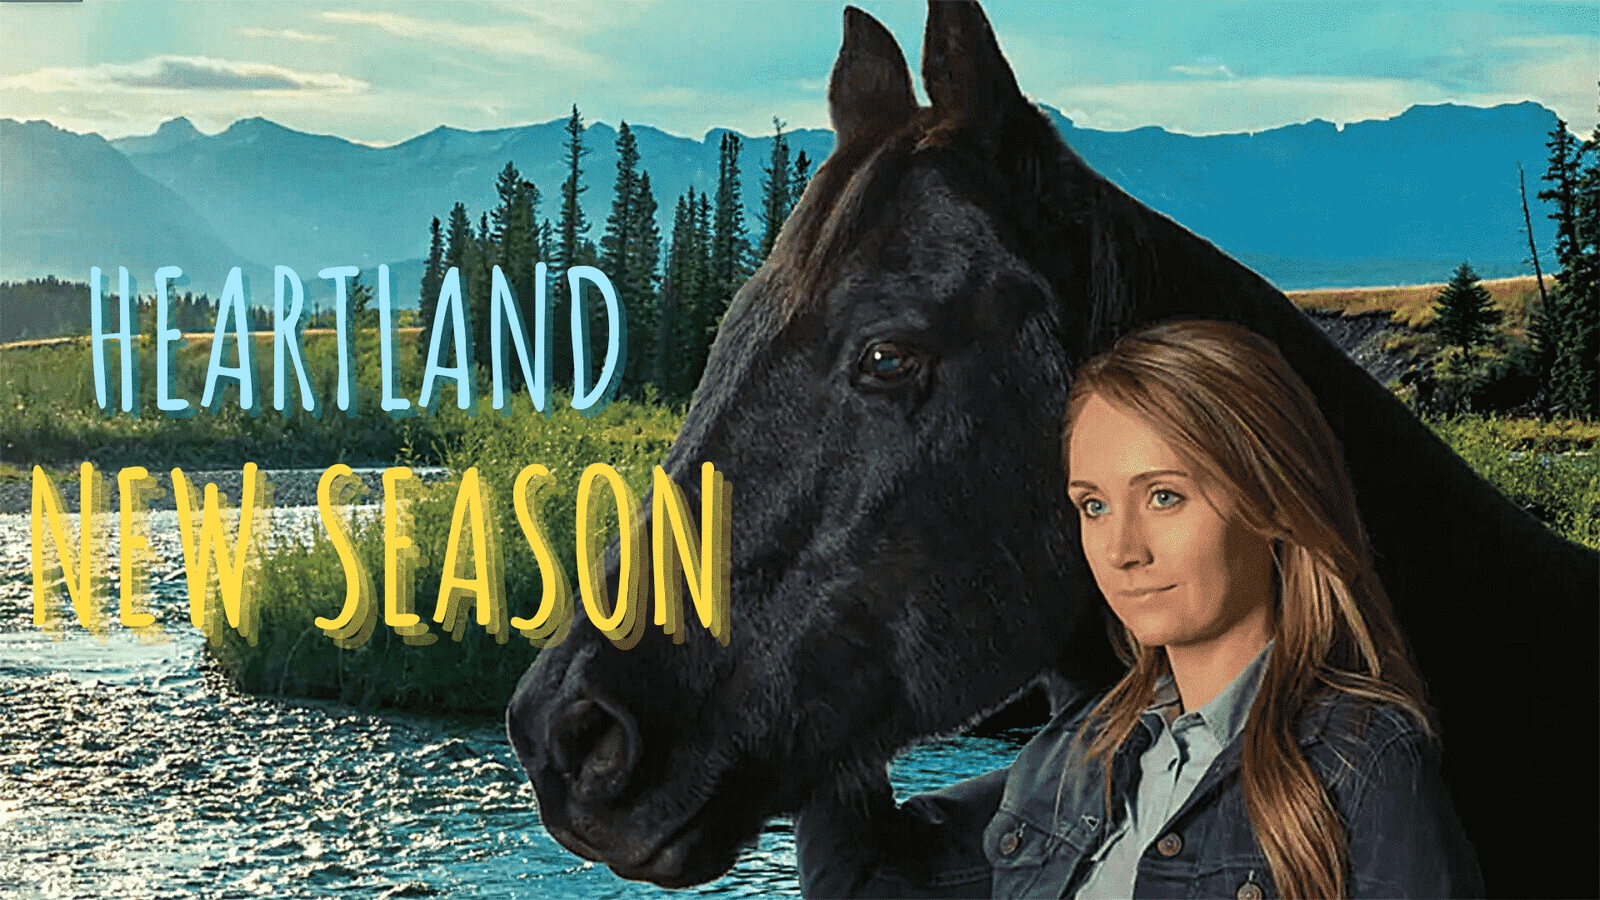 Heartland new season poster.